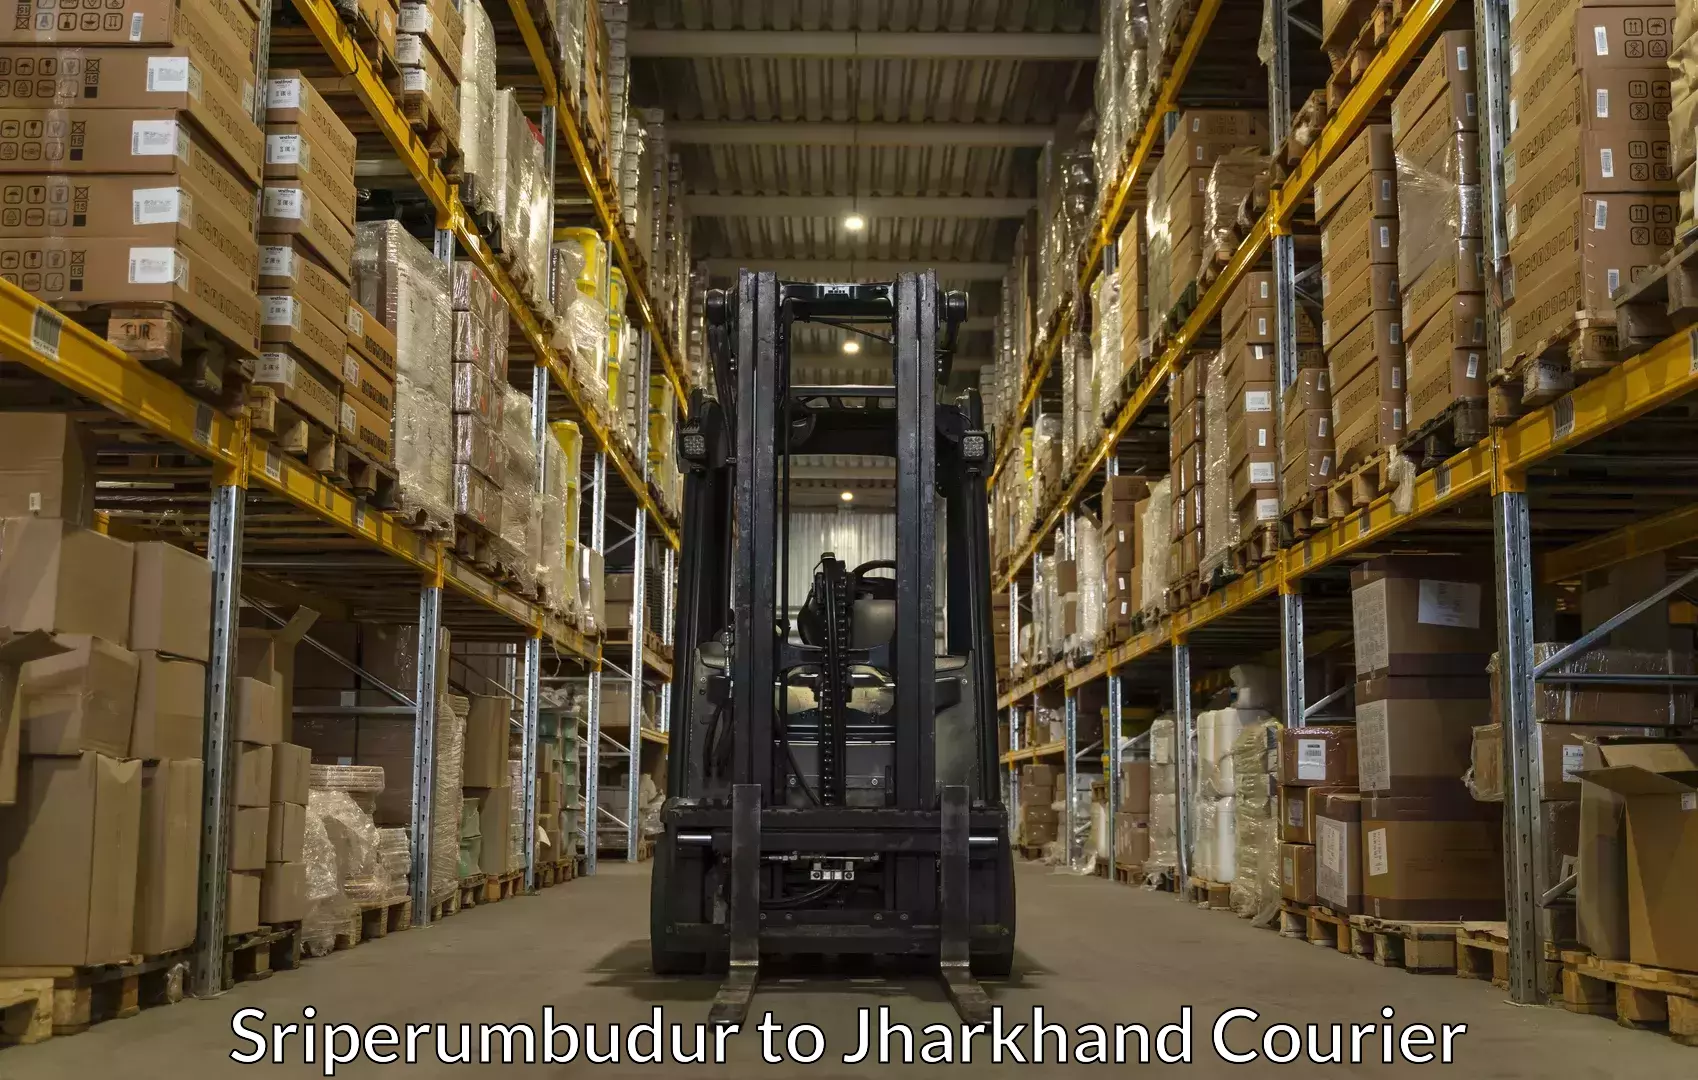 Baggage transport technology Sriperumbudur to Jamshedpur